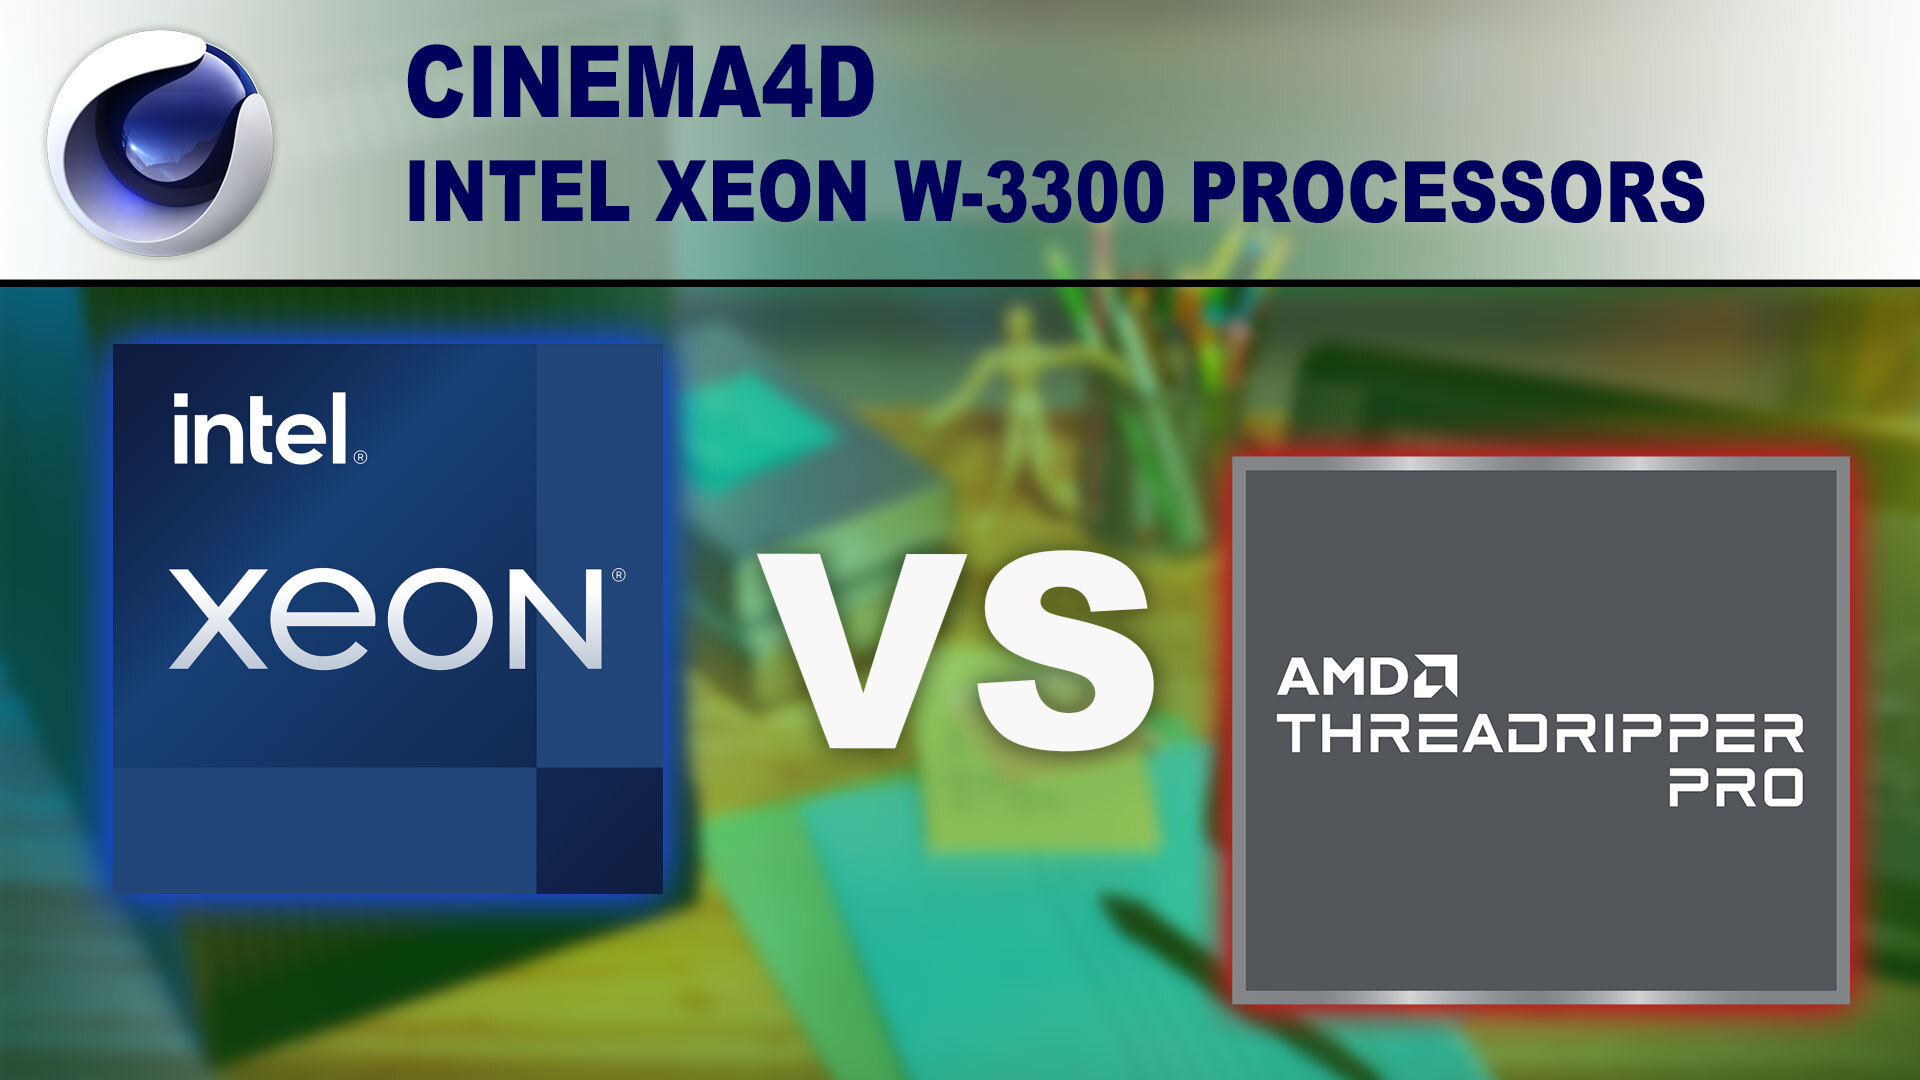 Intel Xeon W-3300 Processors for Cinema 4D